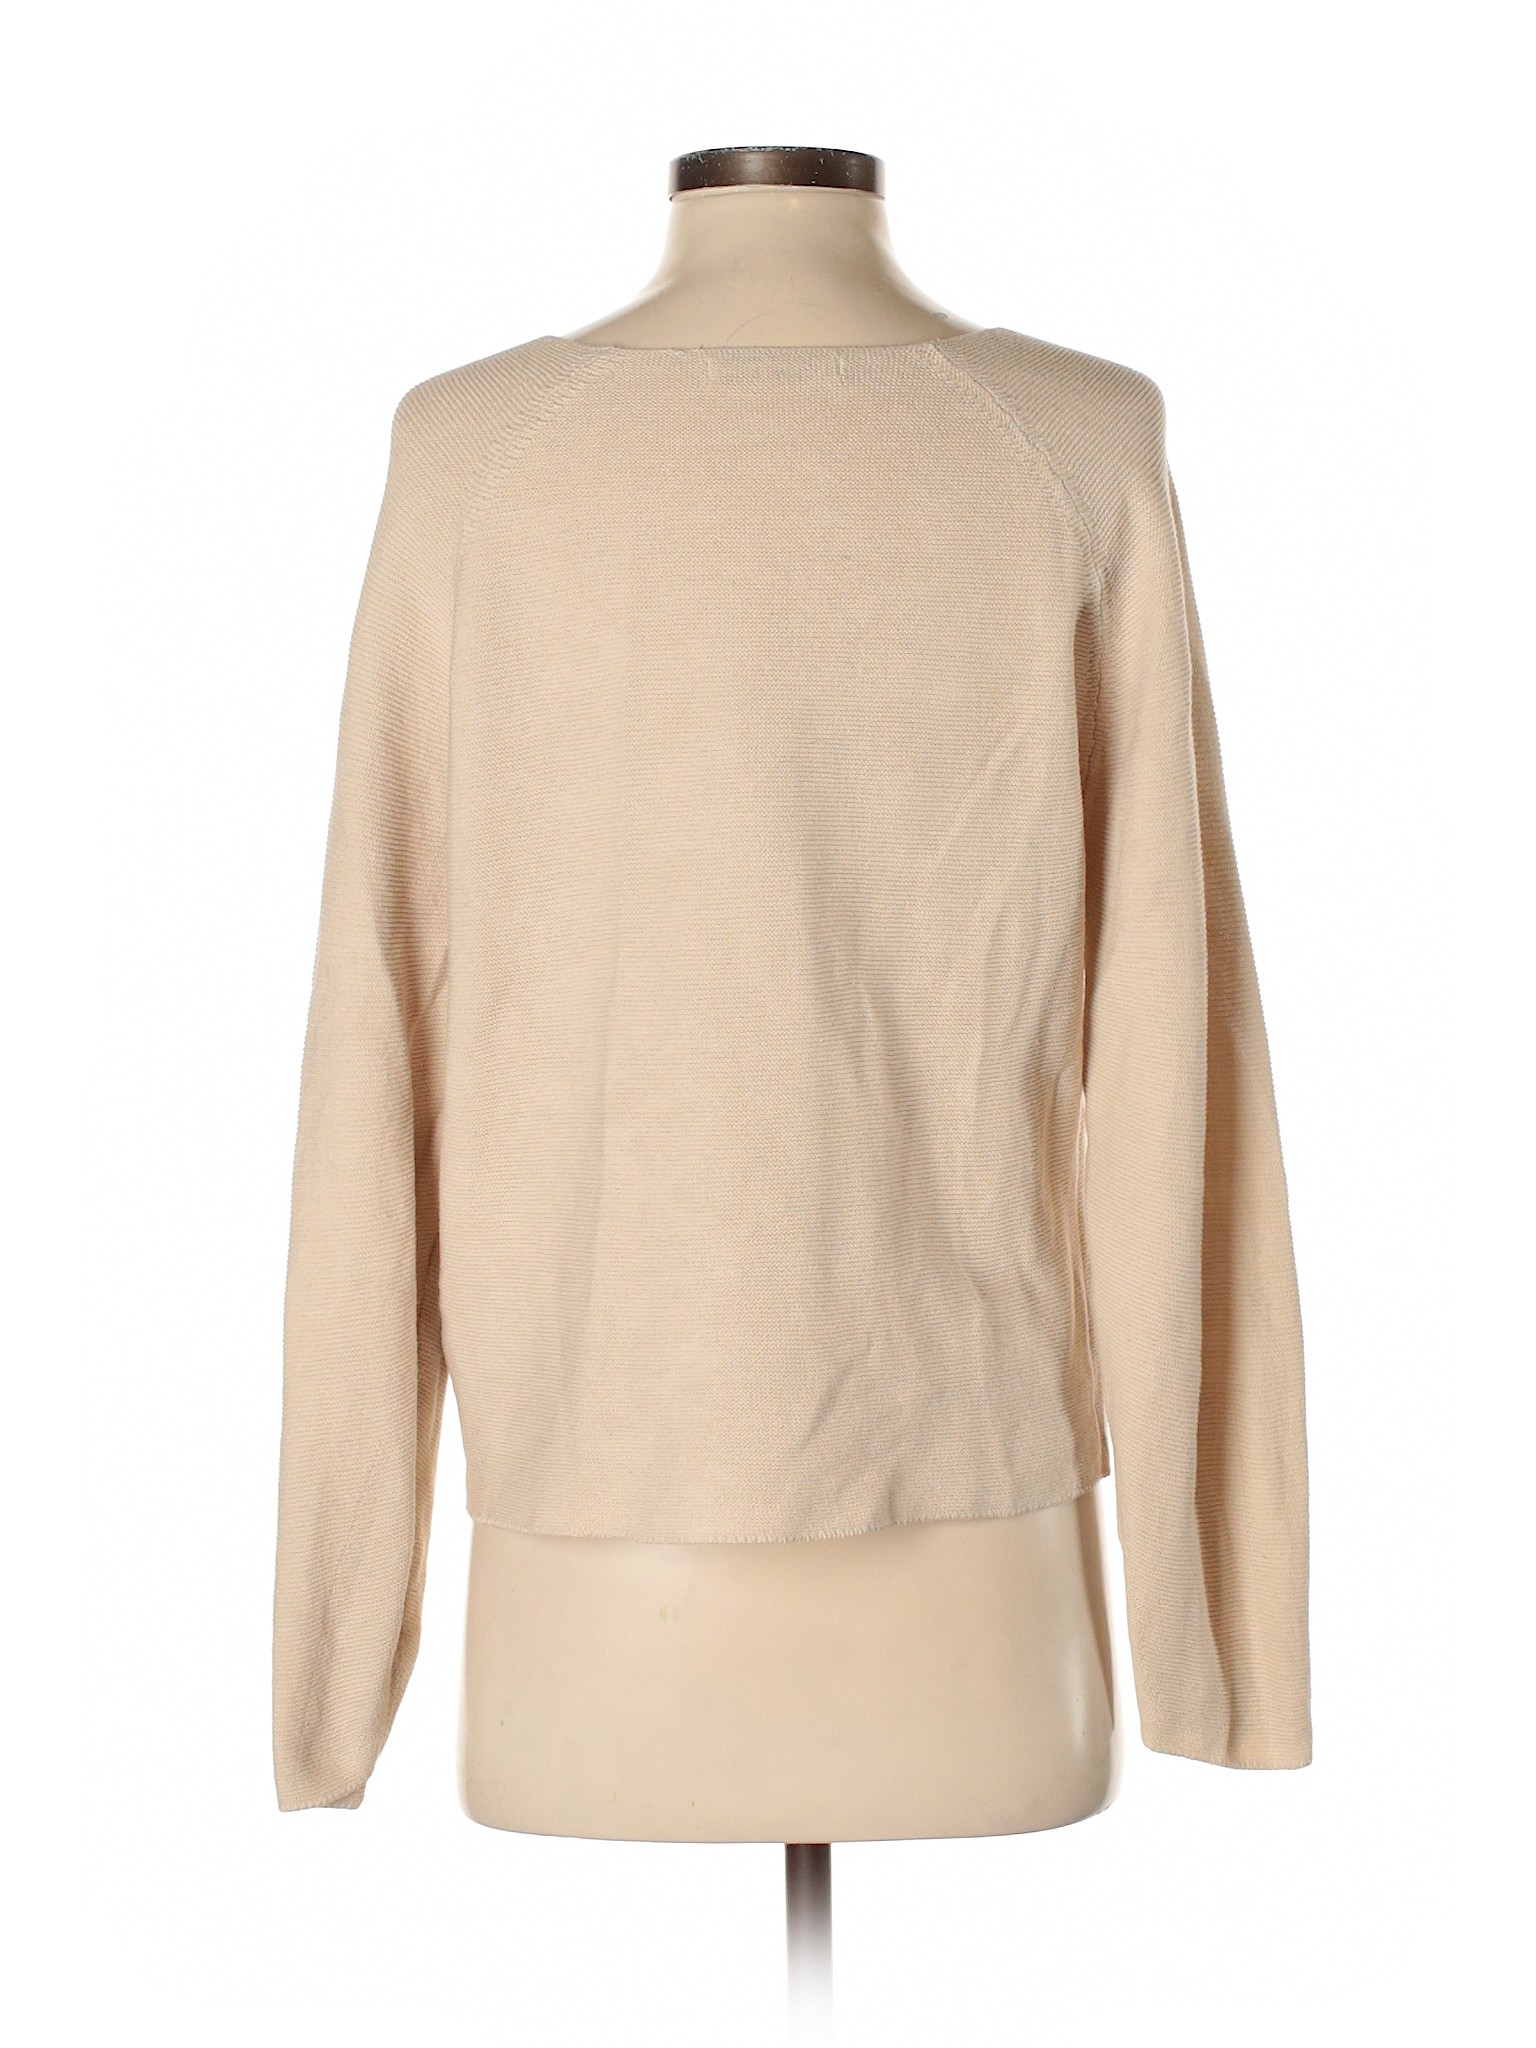 MNG Basics Women Brown Pullover Sweater S | eBay